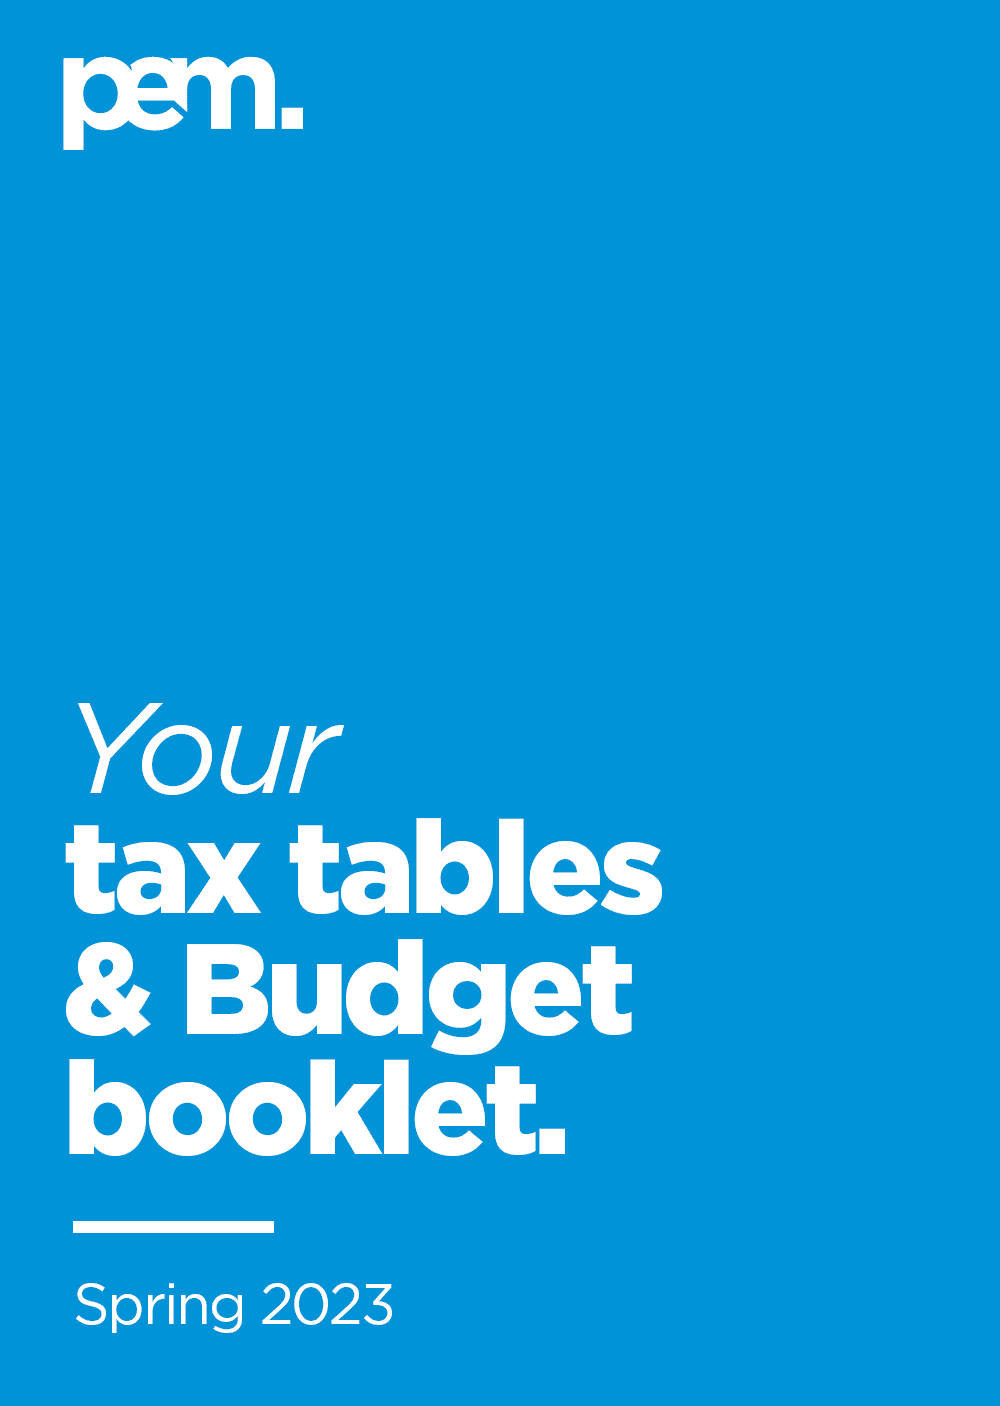 PEM Tax Tables Budget Booklet 2023